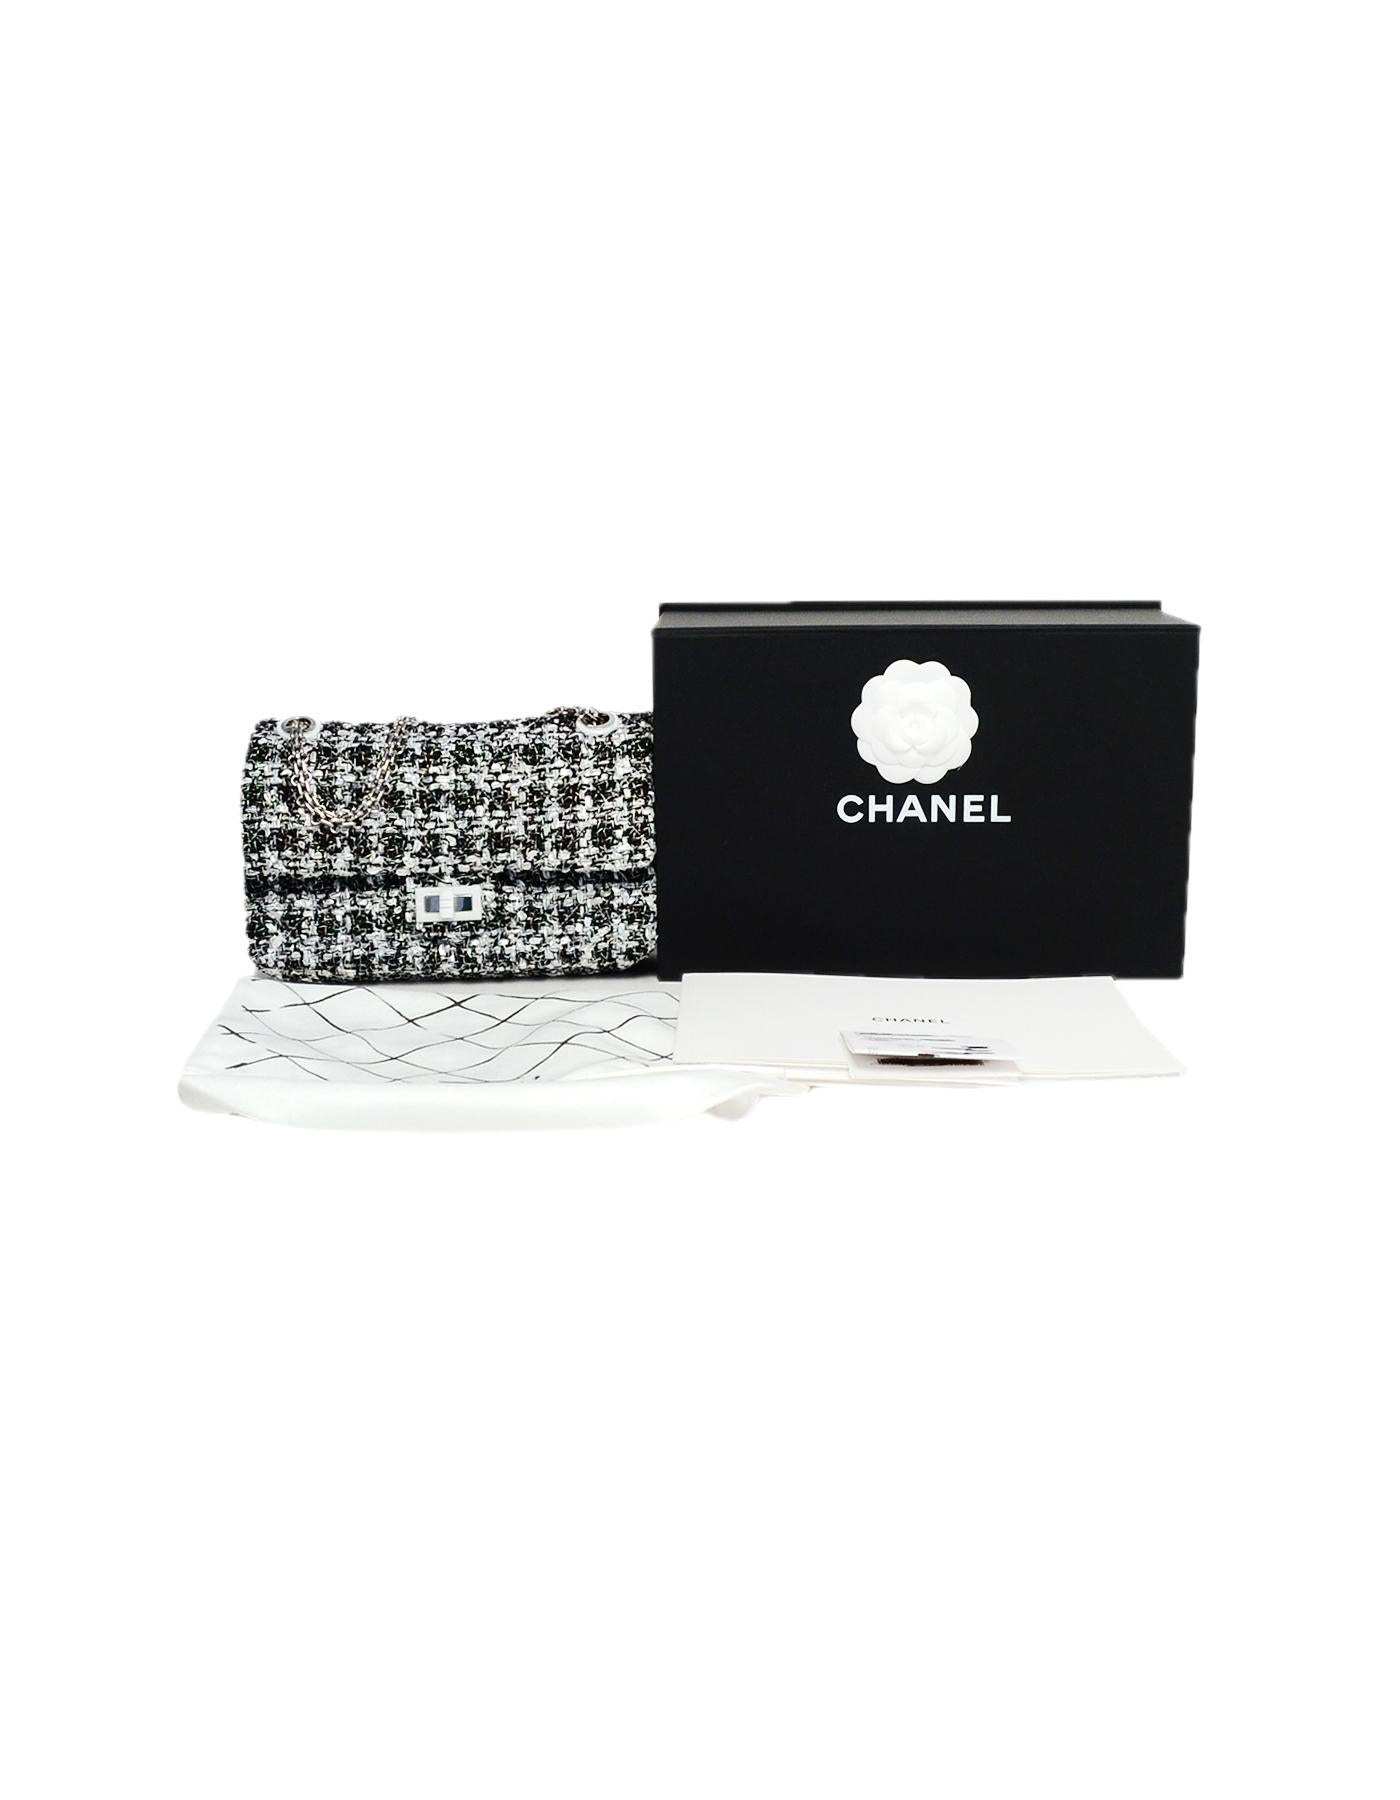 Chanel NWT 2019 Black/White Tweed 2.55 Reissue Flap Bag rt $4, 400 3